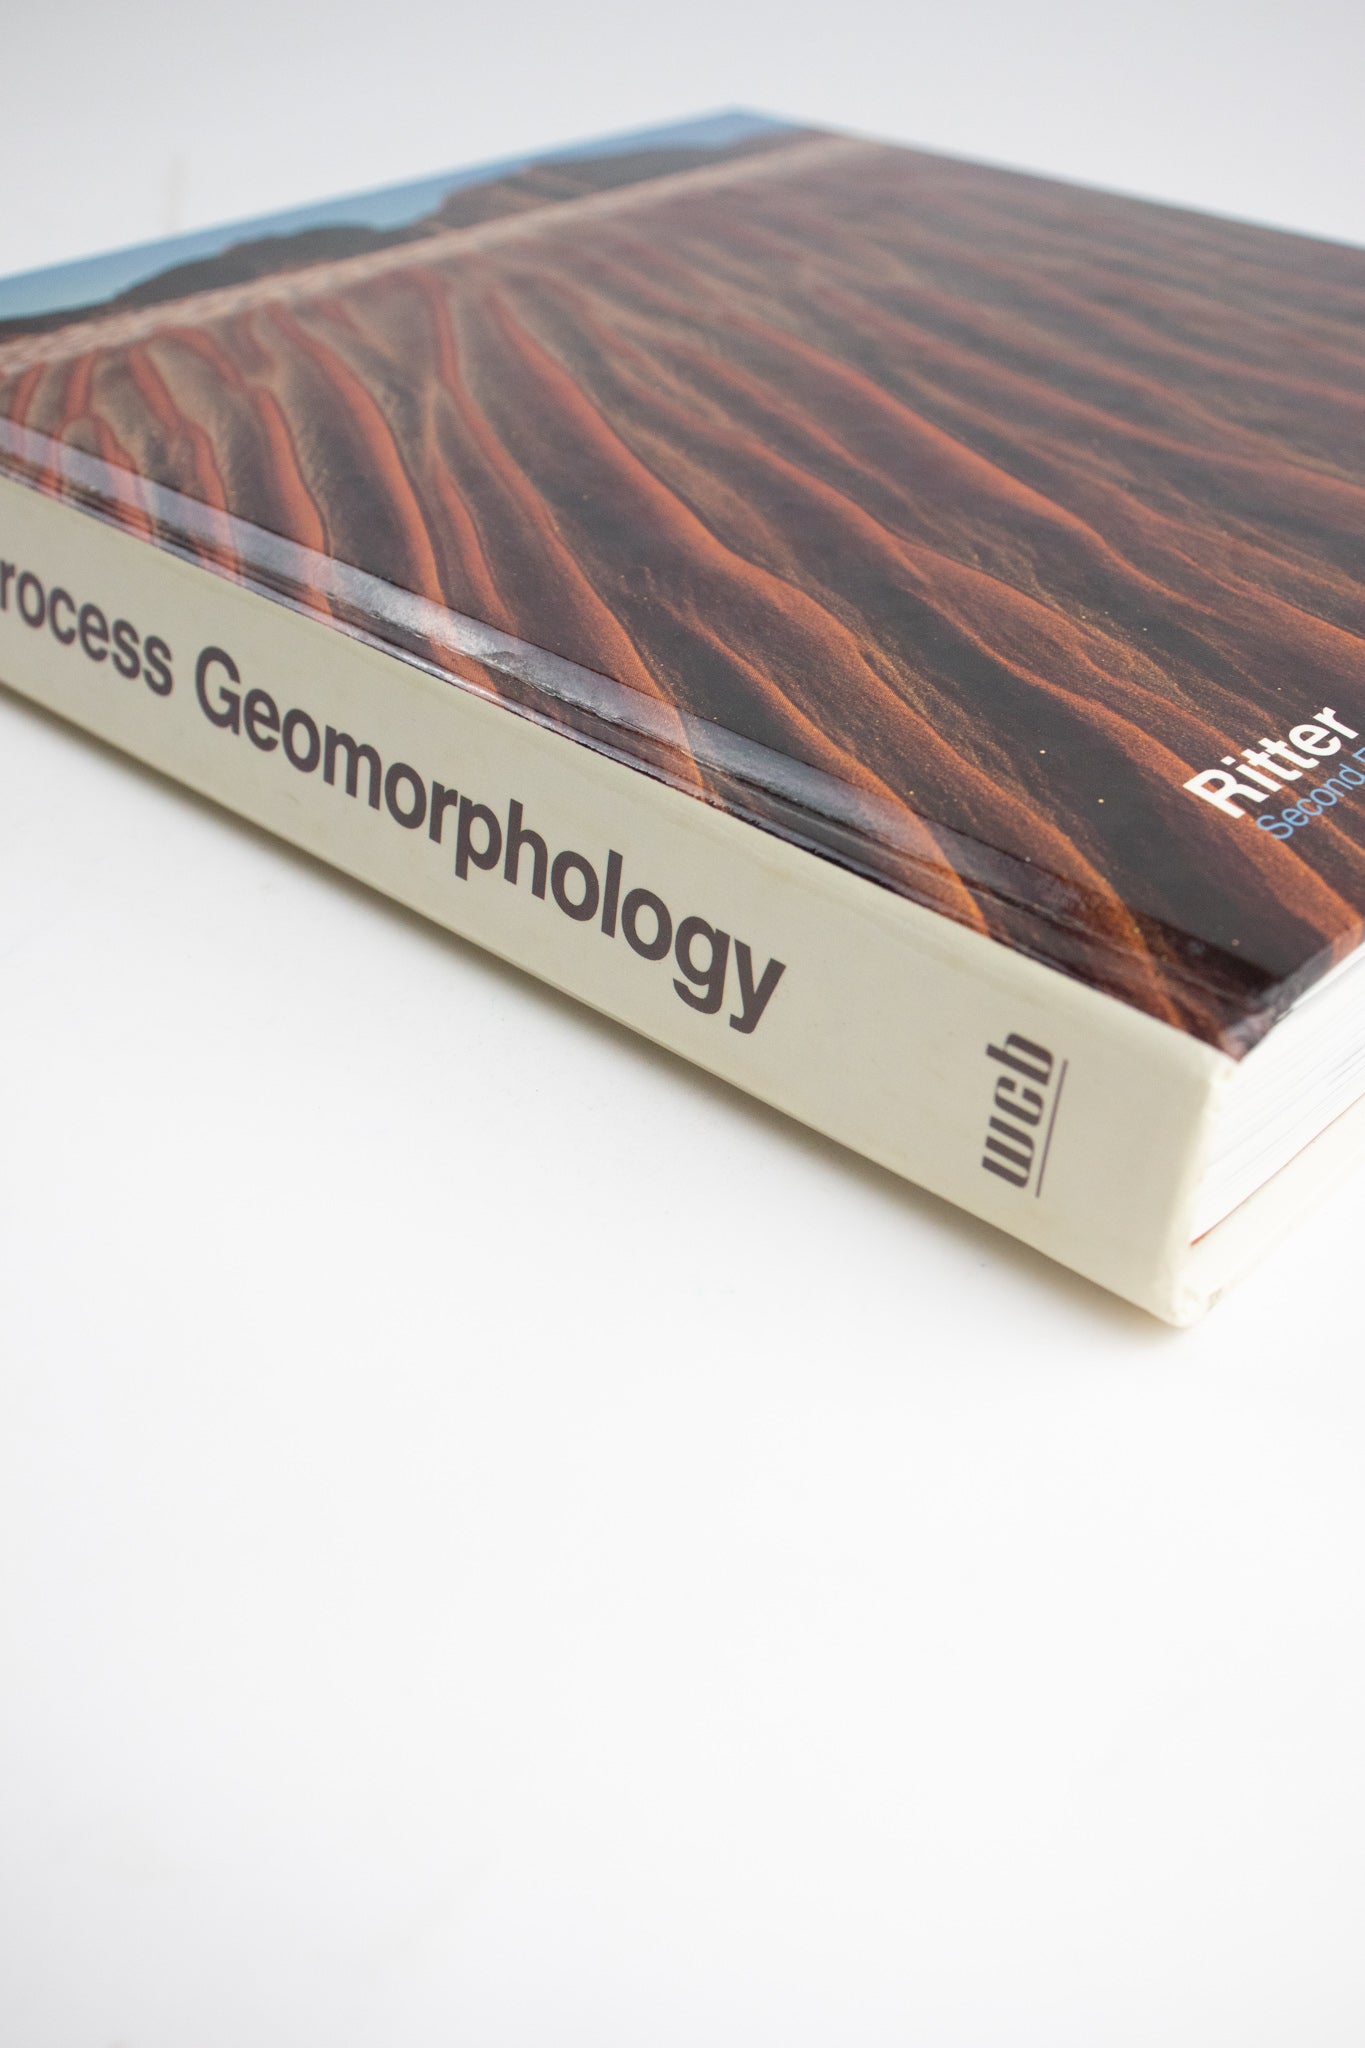 Process Geomorphology - Stemcell Science Shop